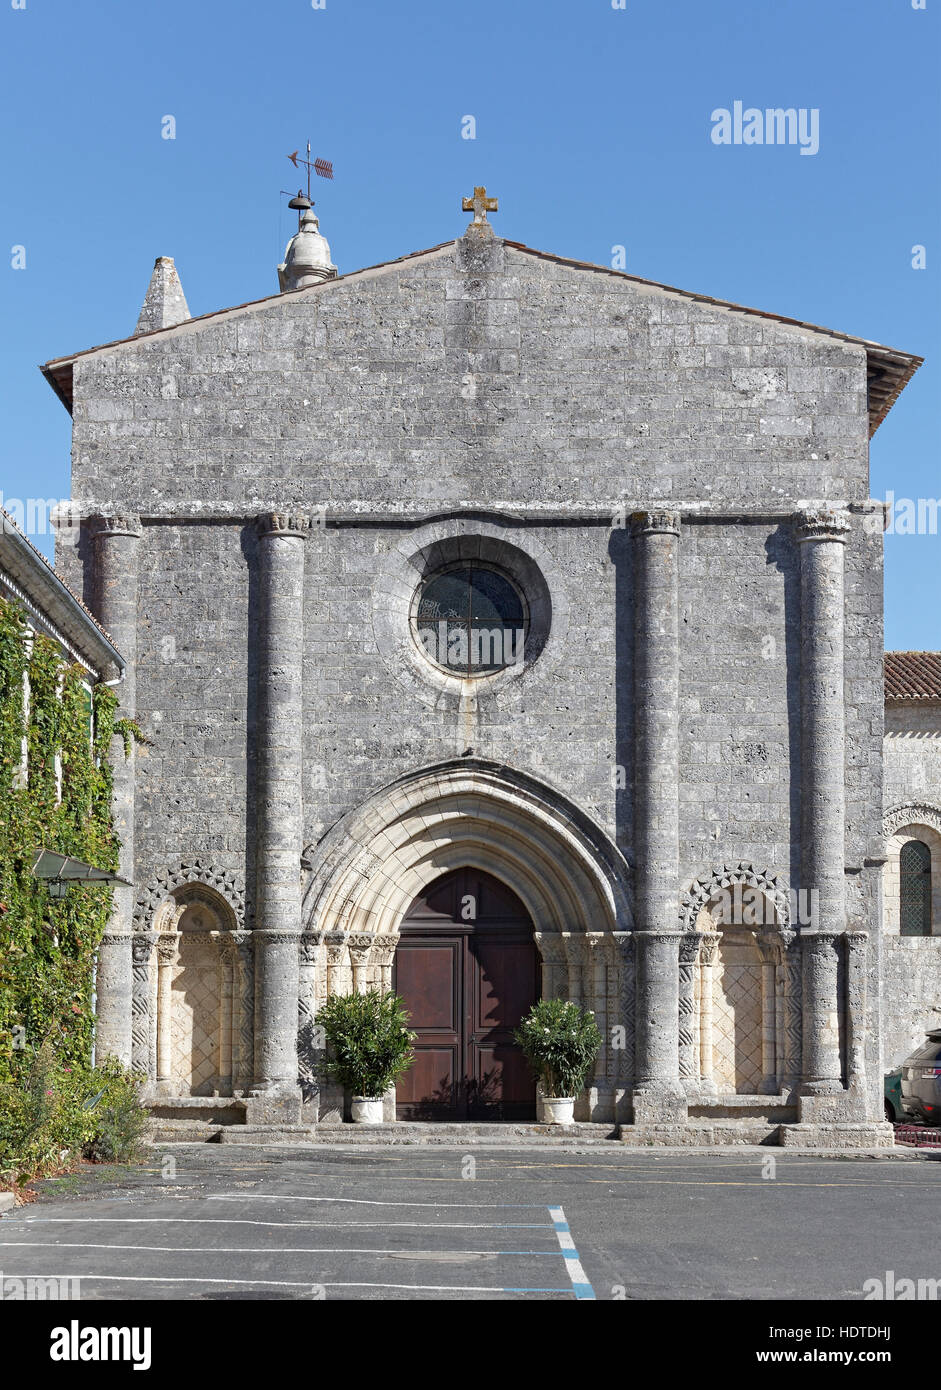 Saint-Georges chiesa romanica, Saint-Georges d'Oleron, Ile d'Oleron, Oleron, Charente-Maritime, Francia Foto Stock